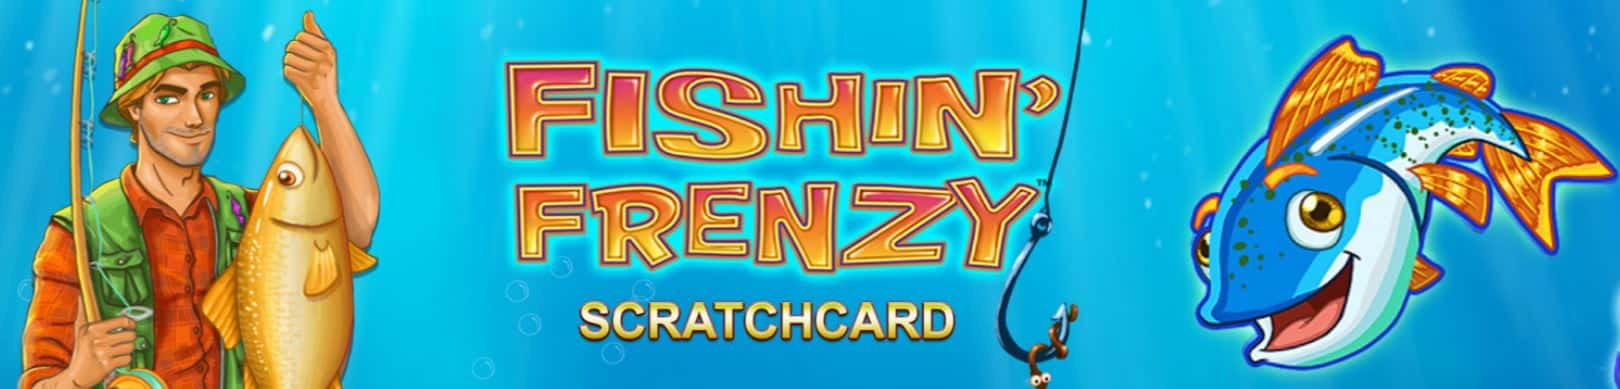 Fishin Frenzy Scratchcard (Blueprint Gaming) - Casino Bomb Squad